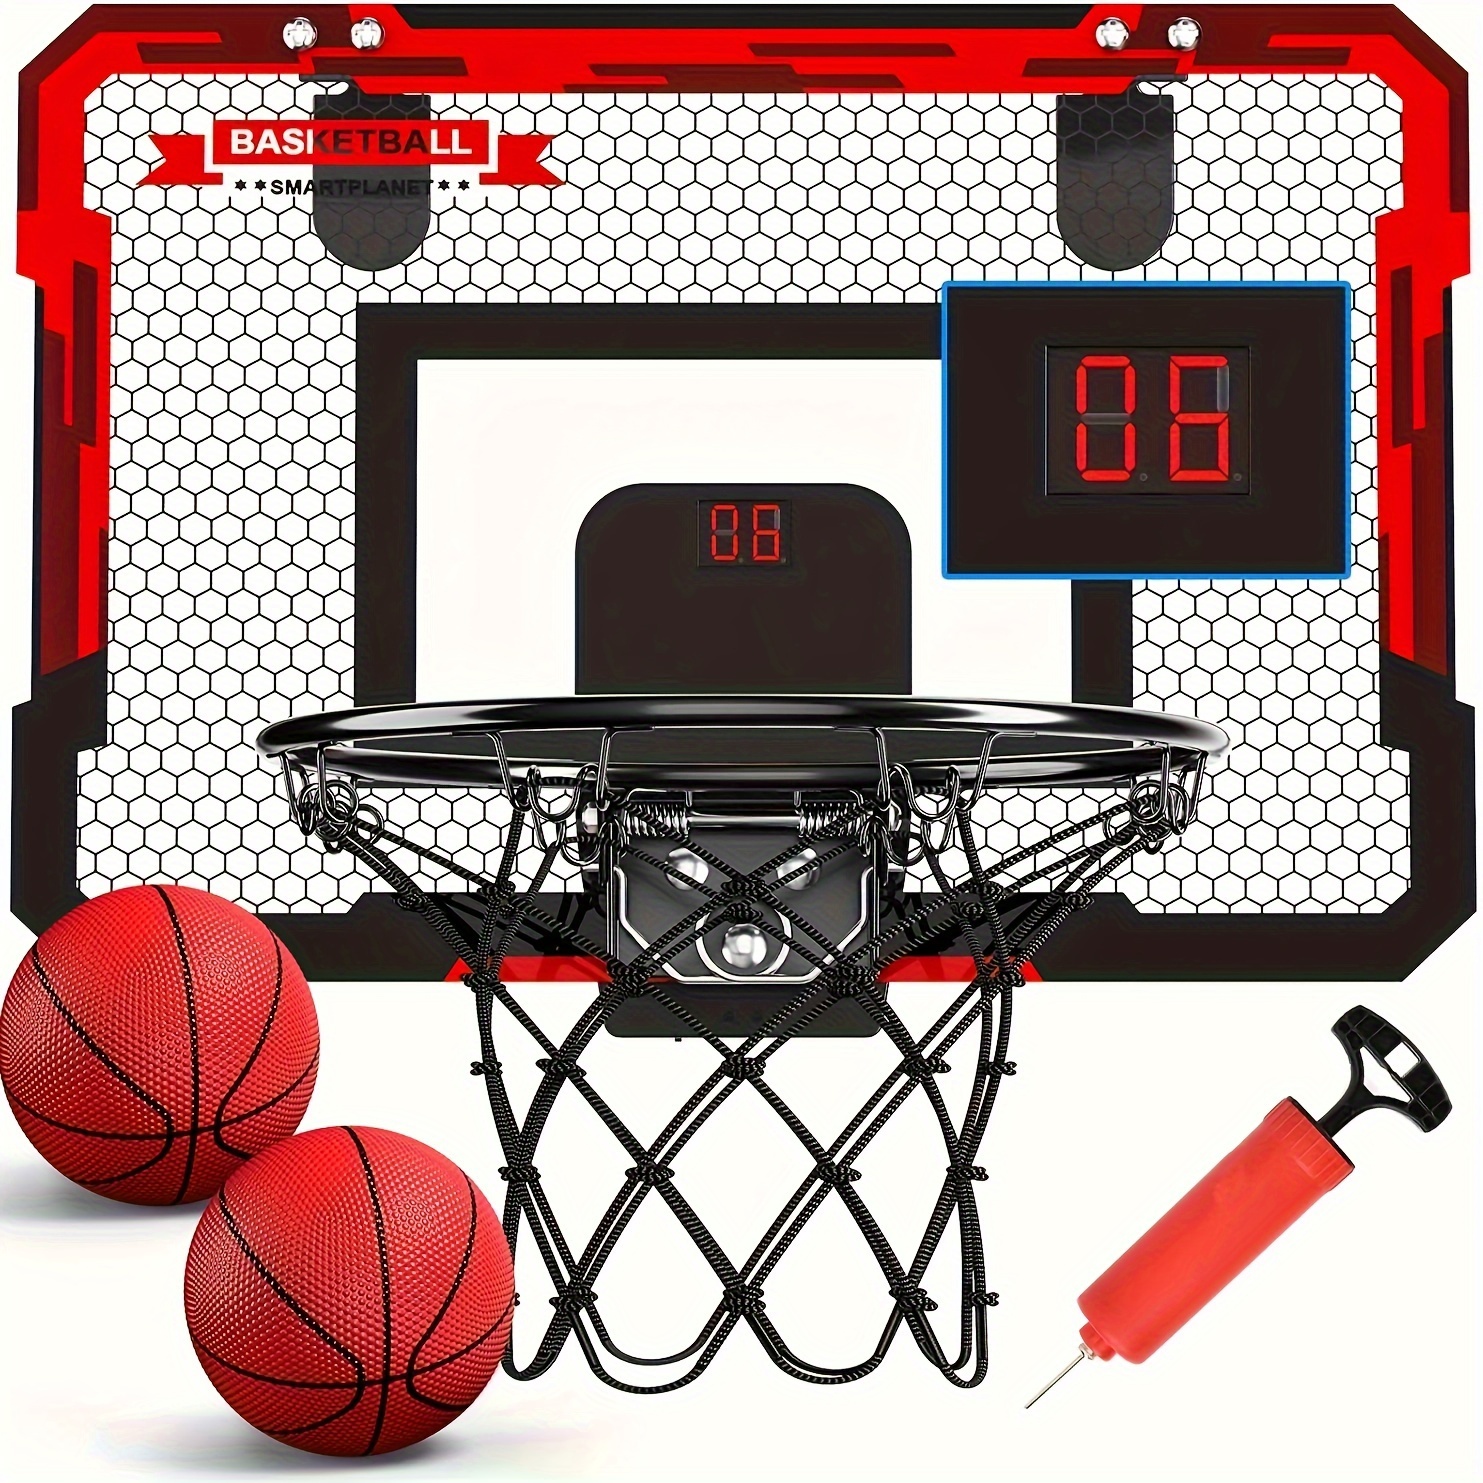 Basketball Hoop Indoor Mini Basketball Hoop For Door With Electronic  Scoreboard 4 Balls Air Pump Basketball Gifts For Boys Teen Kids, 90 Days  Buyer Protection